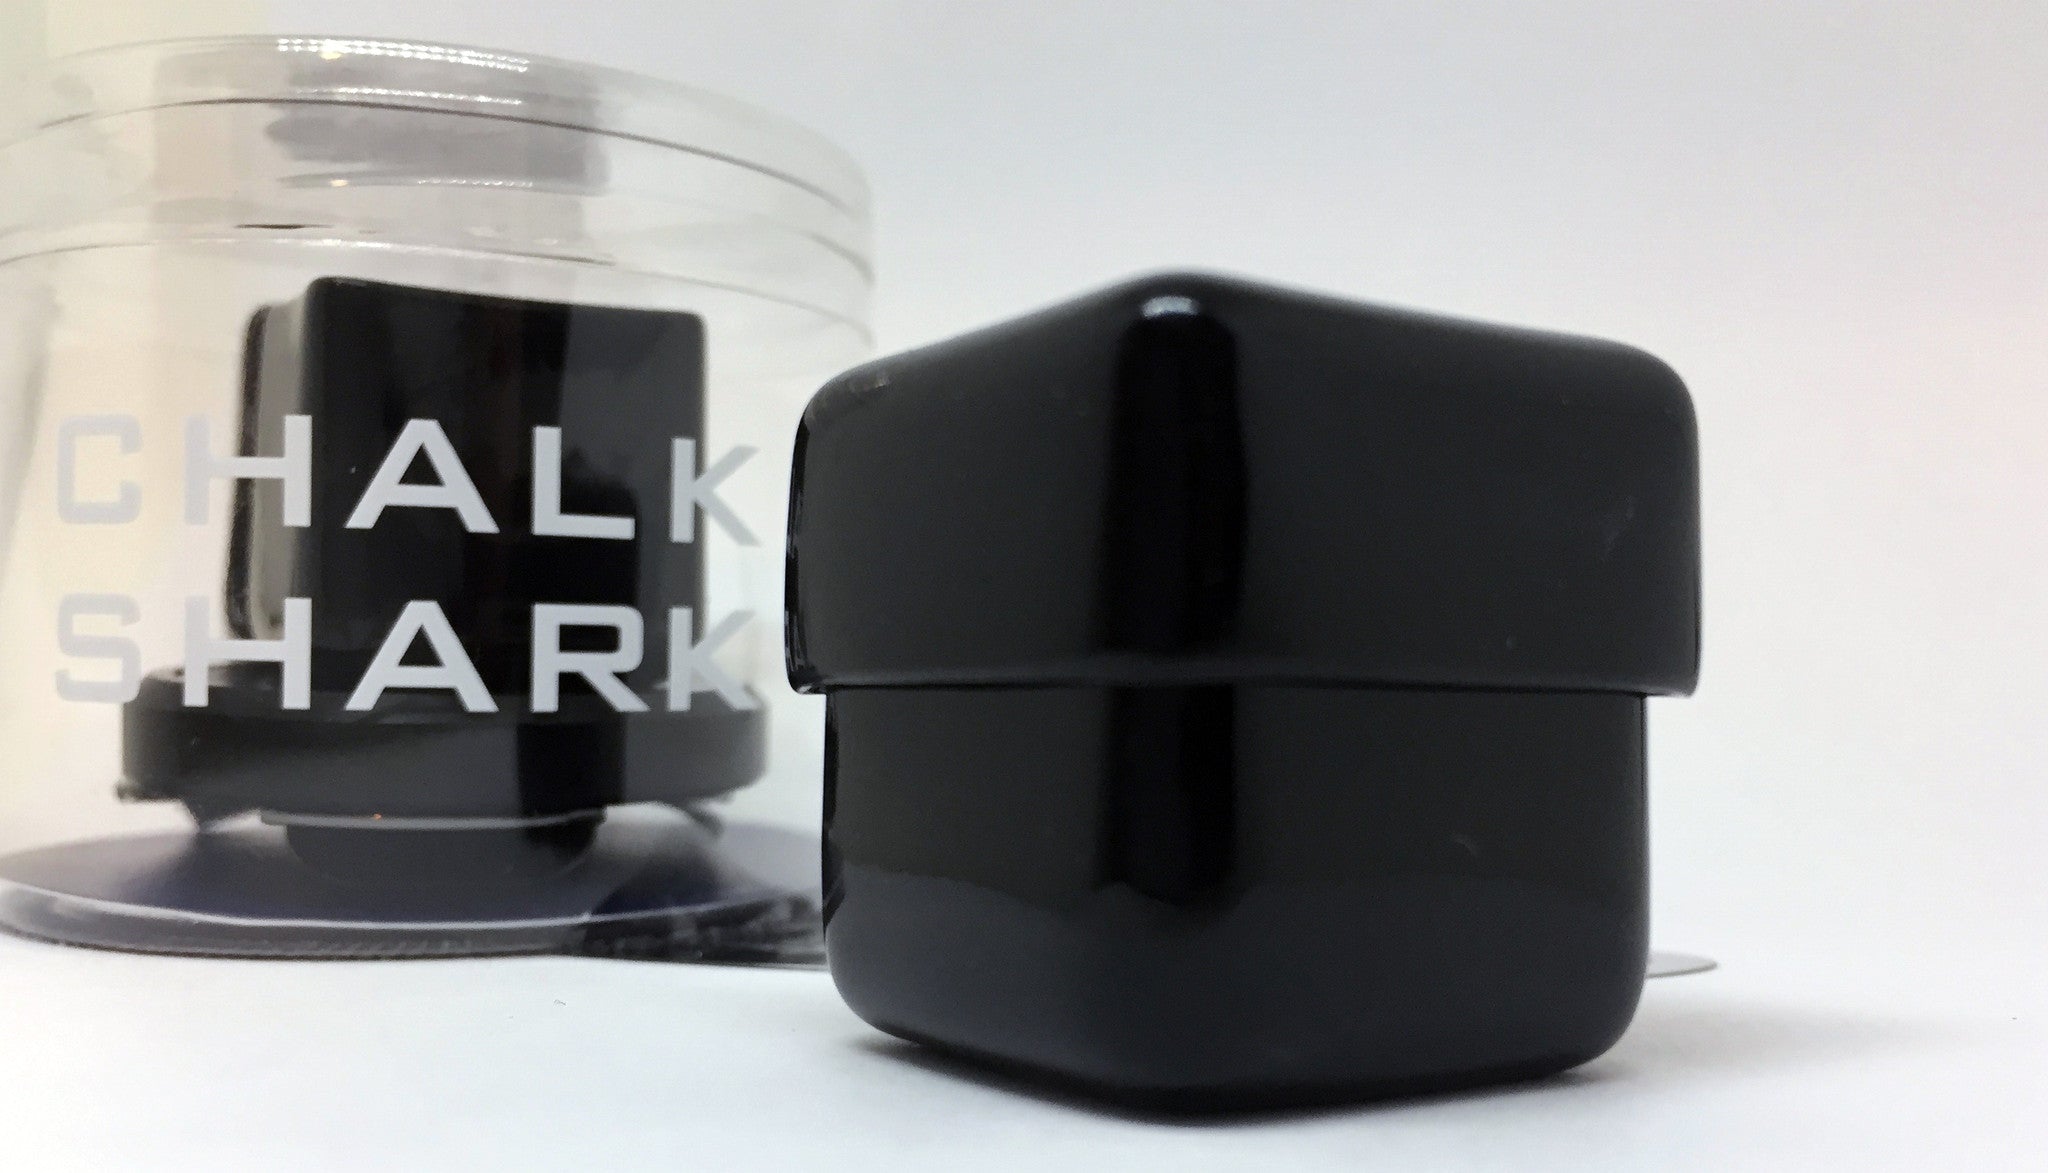 Kamui ROKU QCCS Chalk Shark Magnetic Chalker (Hexagon)